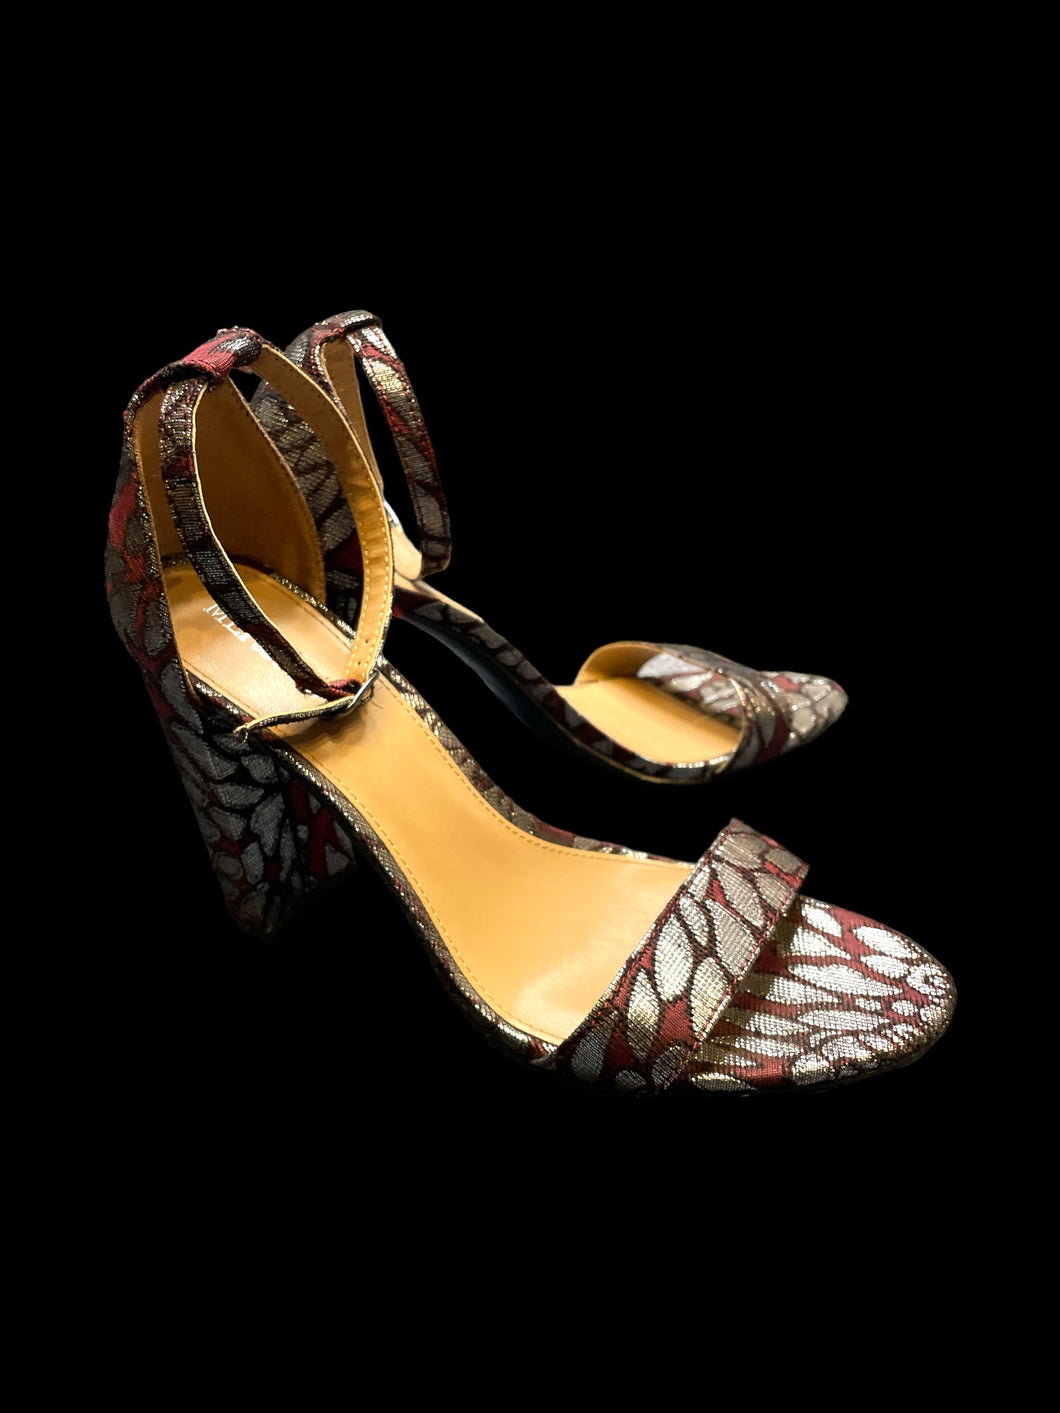 7M/8.5W Burgundy & metallic silver botanical patter block heel strappy high heels